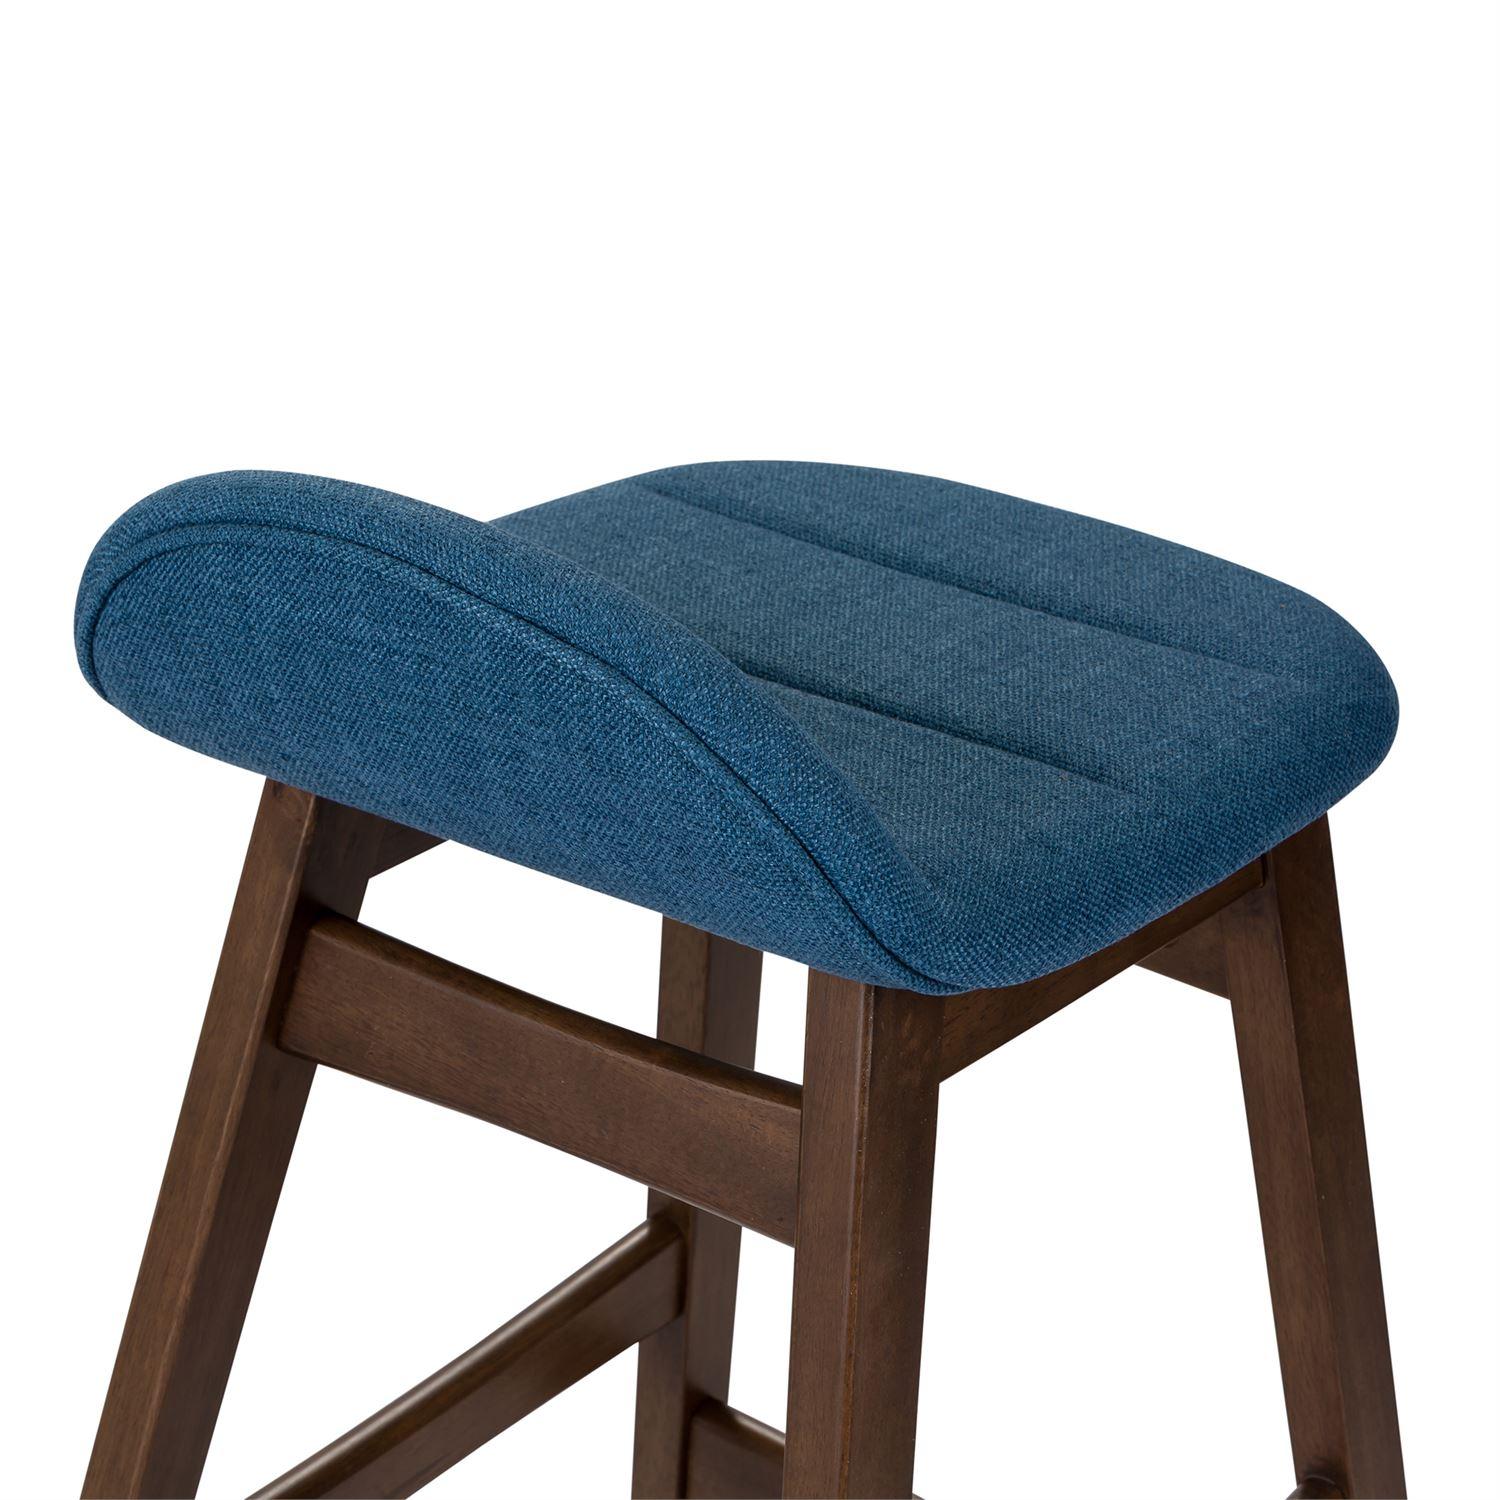 

    
198-B650124-BU Solids Brown Wood Counter Chair 198-B650124-BU Liberty Furniture
